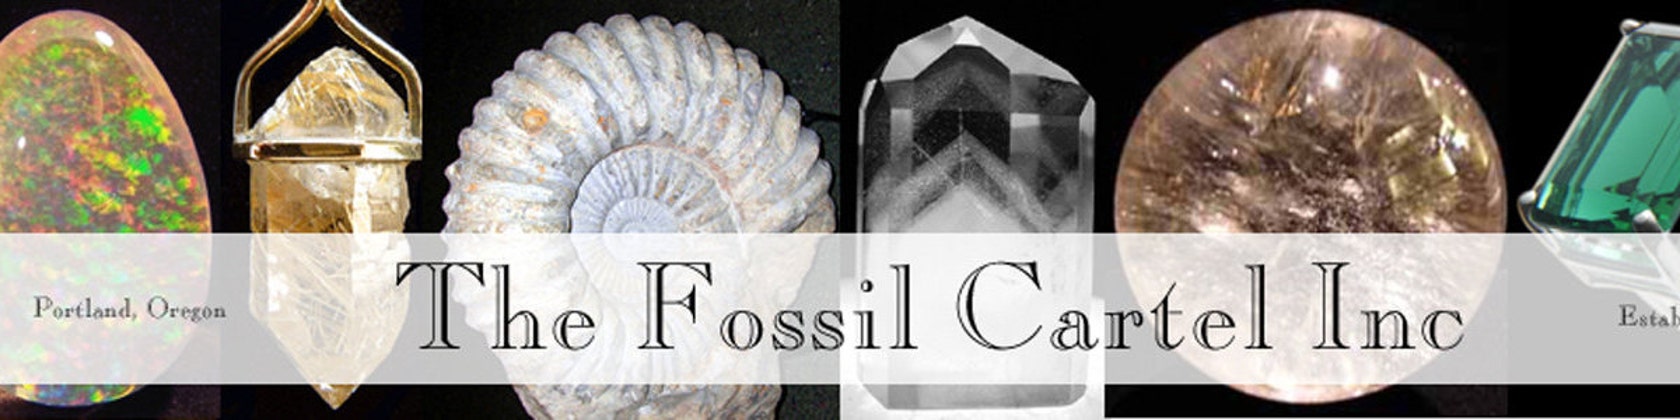 Silver Polishing Cloth - The Fossil Cartel